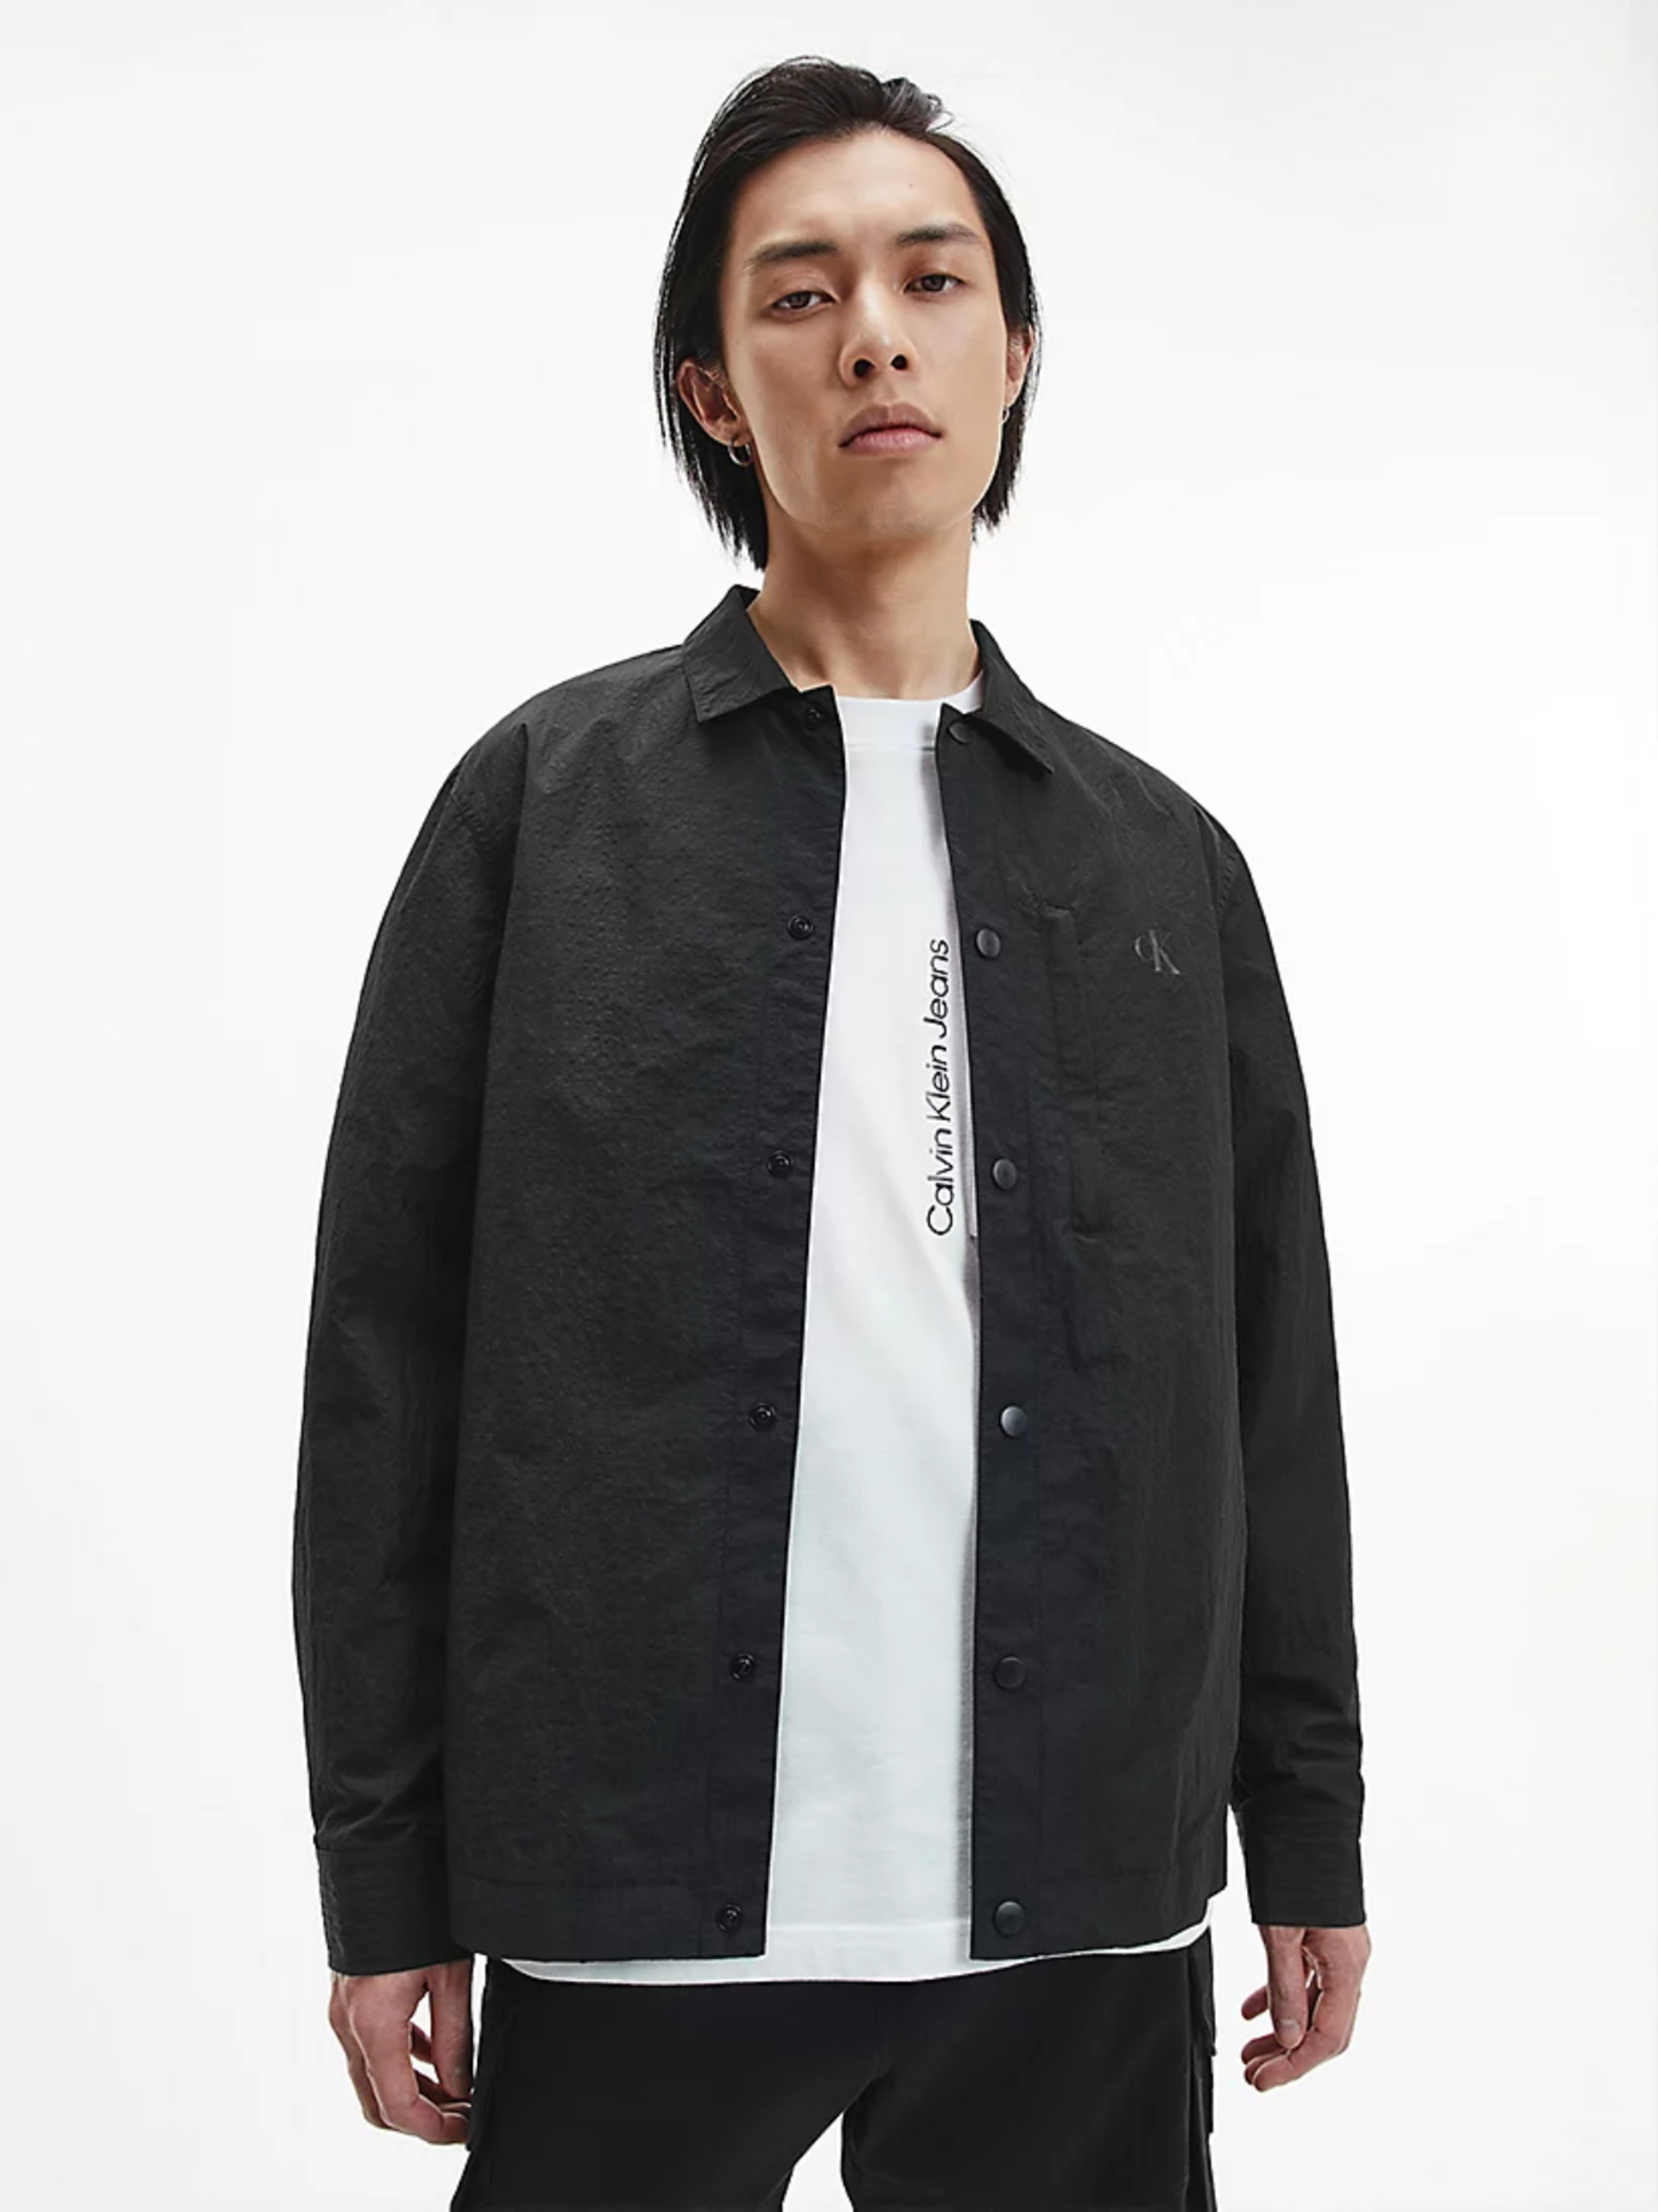 Calvin Klein pánská černá košilová bunda - XXL (BEH)